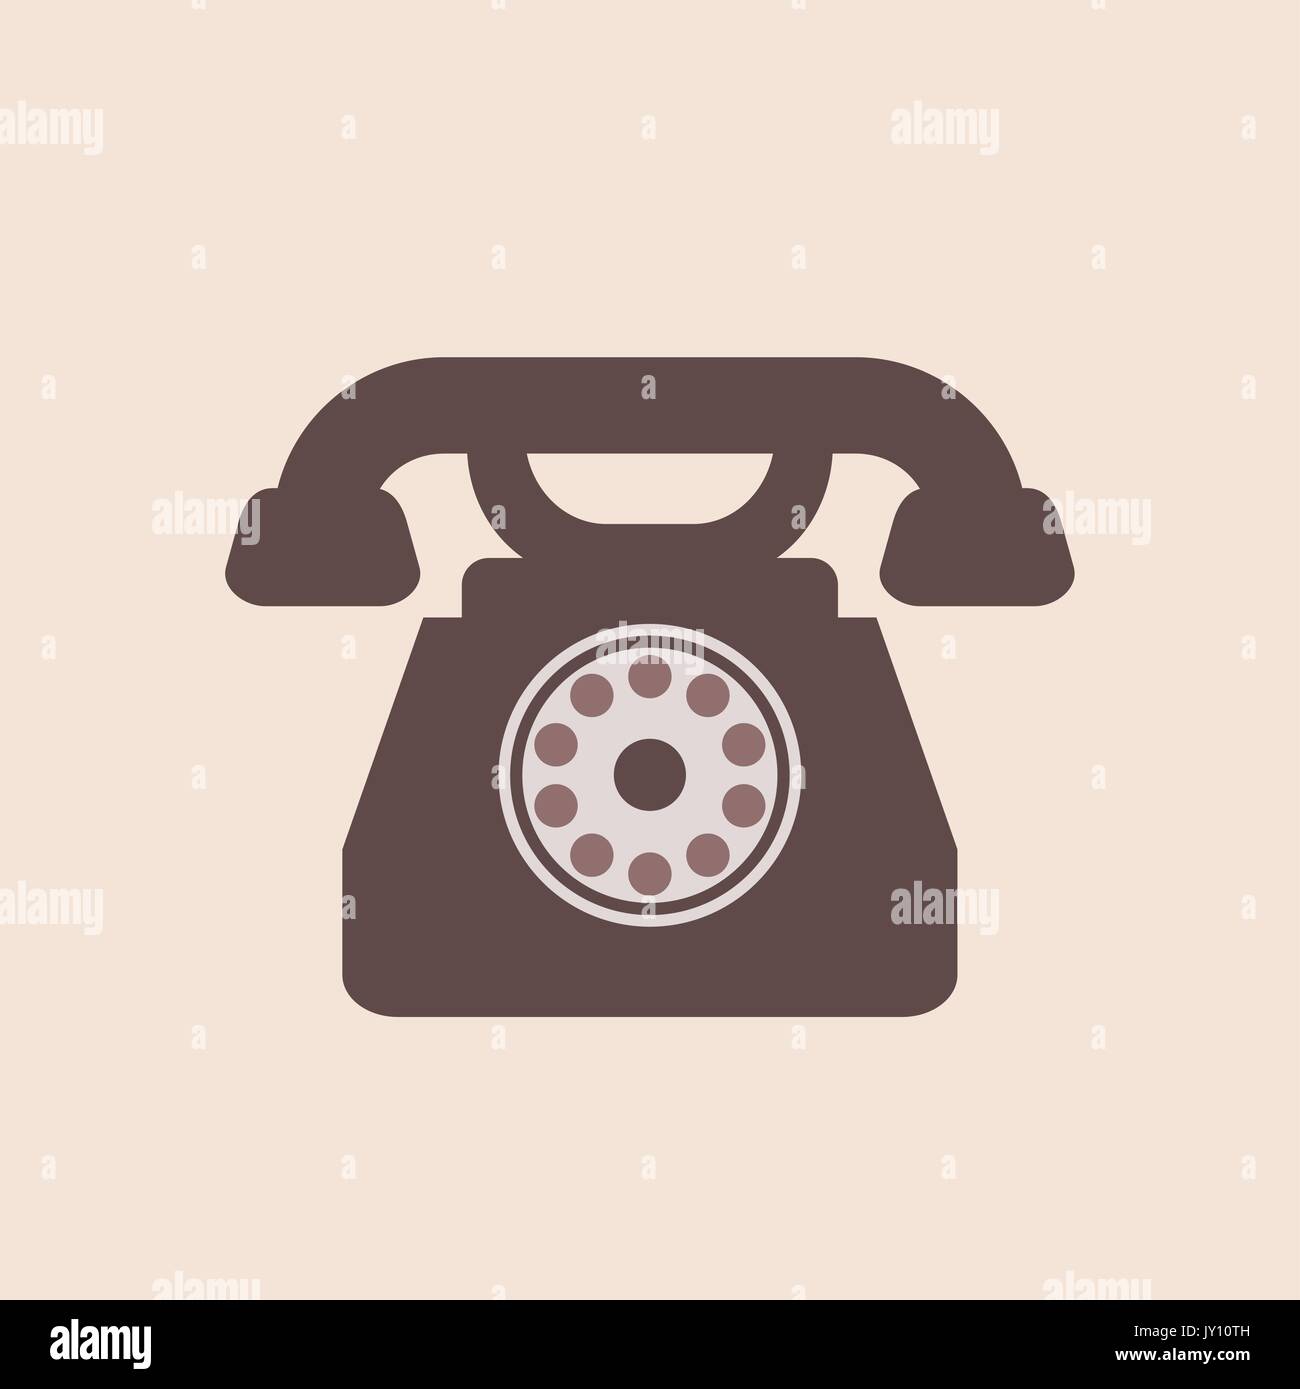 Call, communication, device, phone, retro, telephone icon